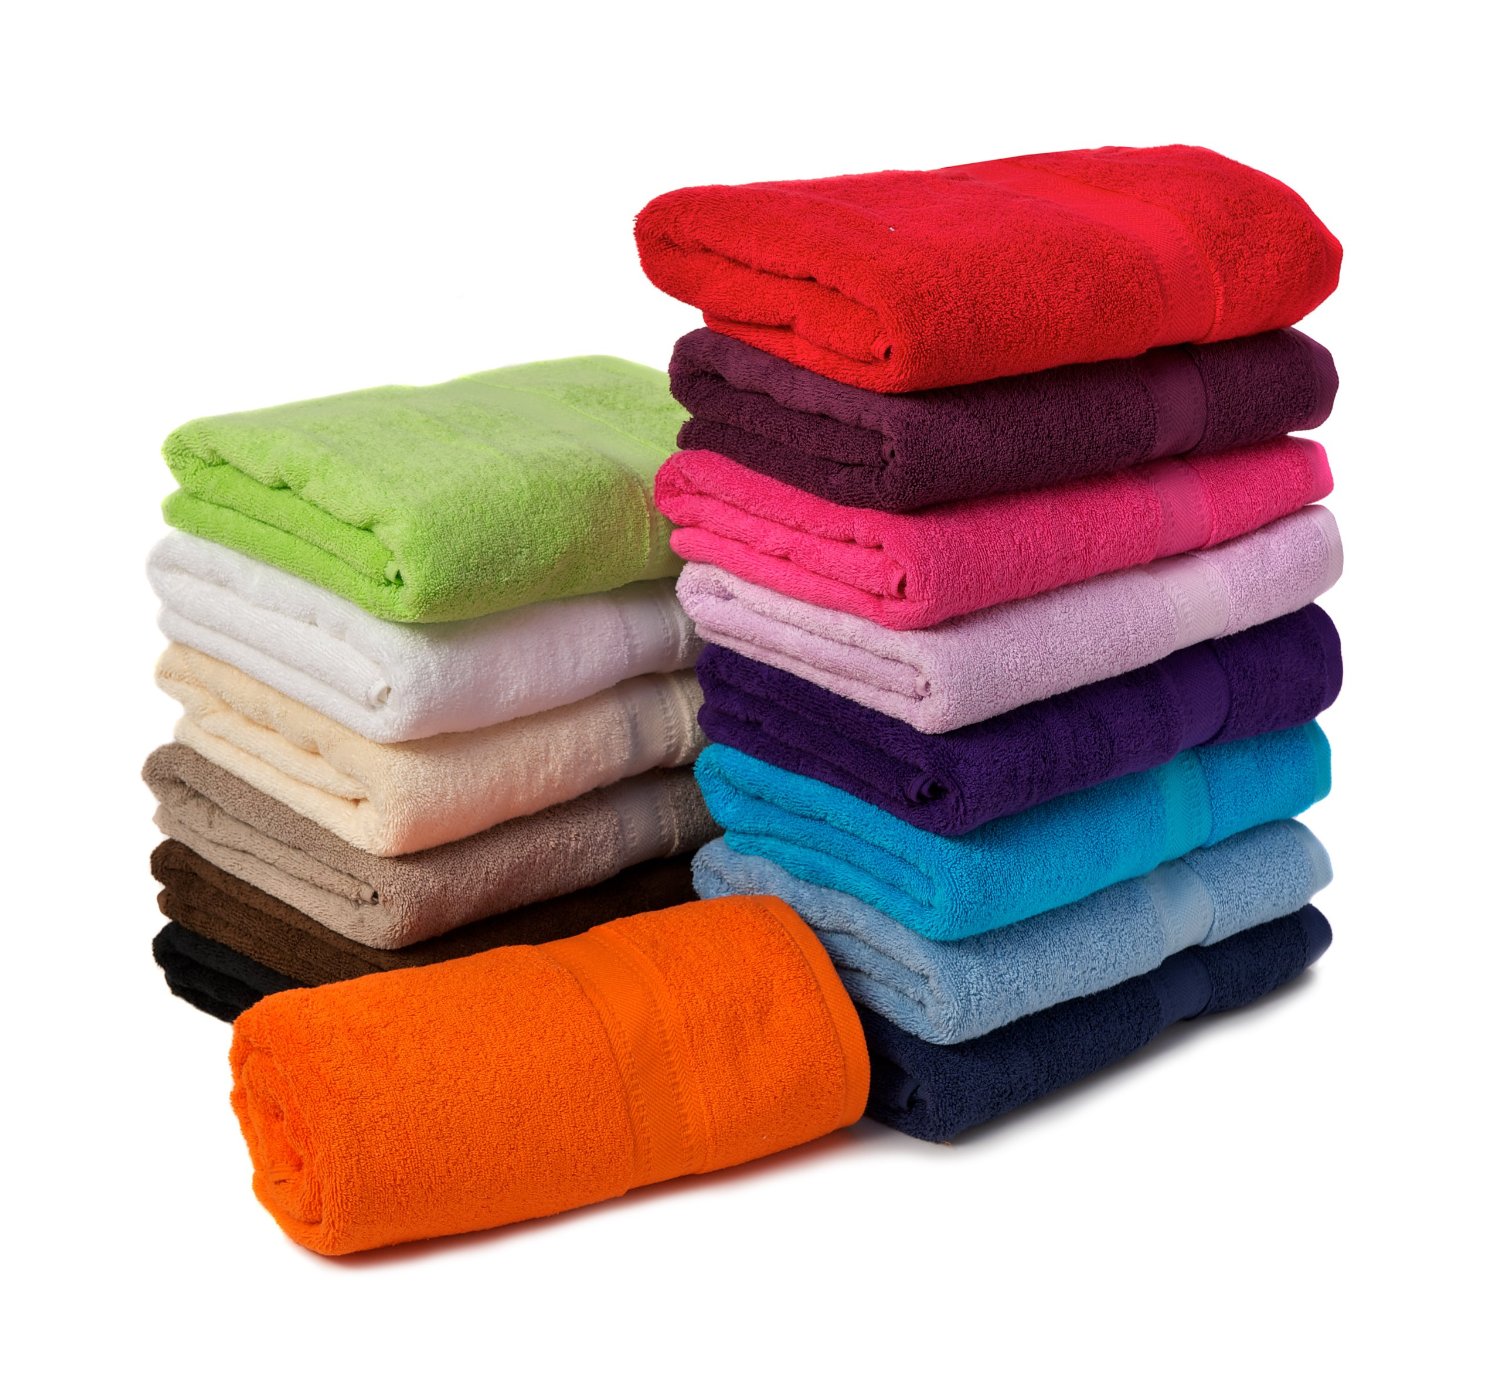 Textile полотенце. Полотенце. Полотенце/разноцветное. Сложенные полотенца. Стопка полотенец.